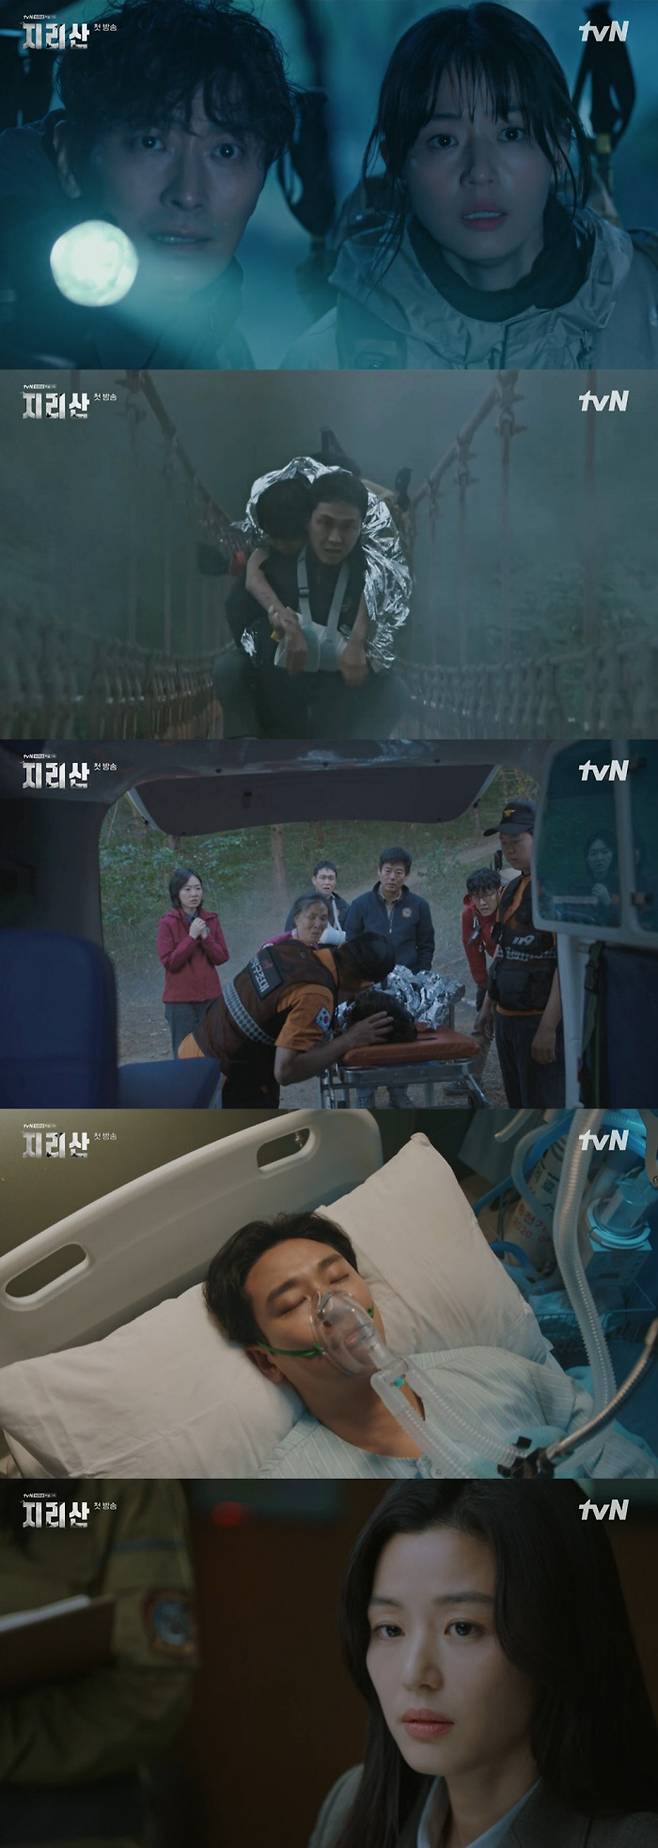 tvN 15주년 특별기획 <지리산> 속 장면들. tvN 제공